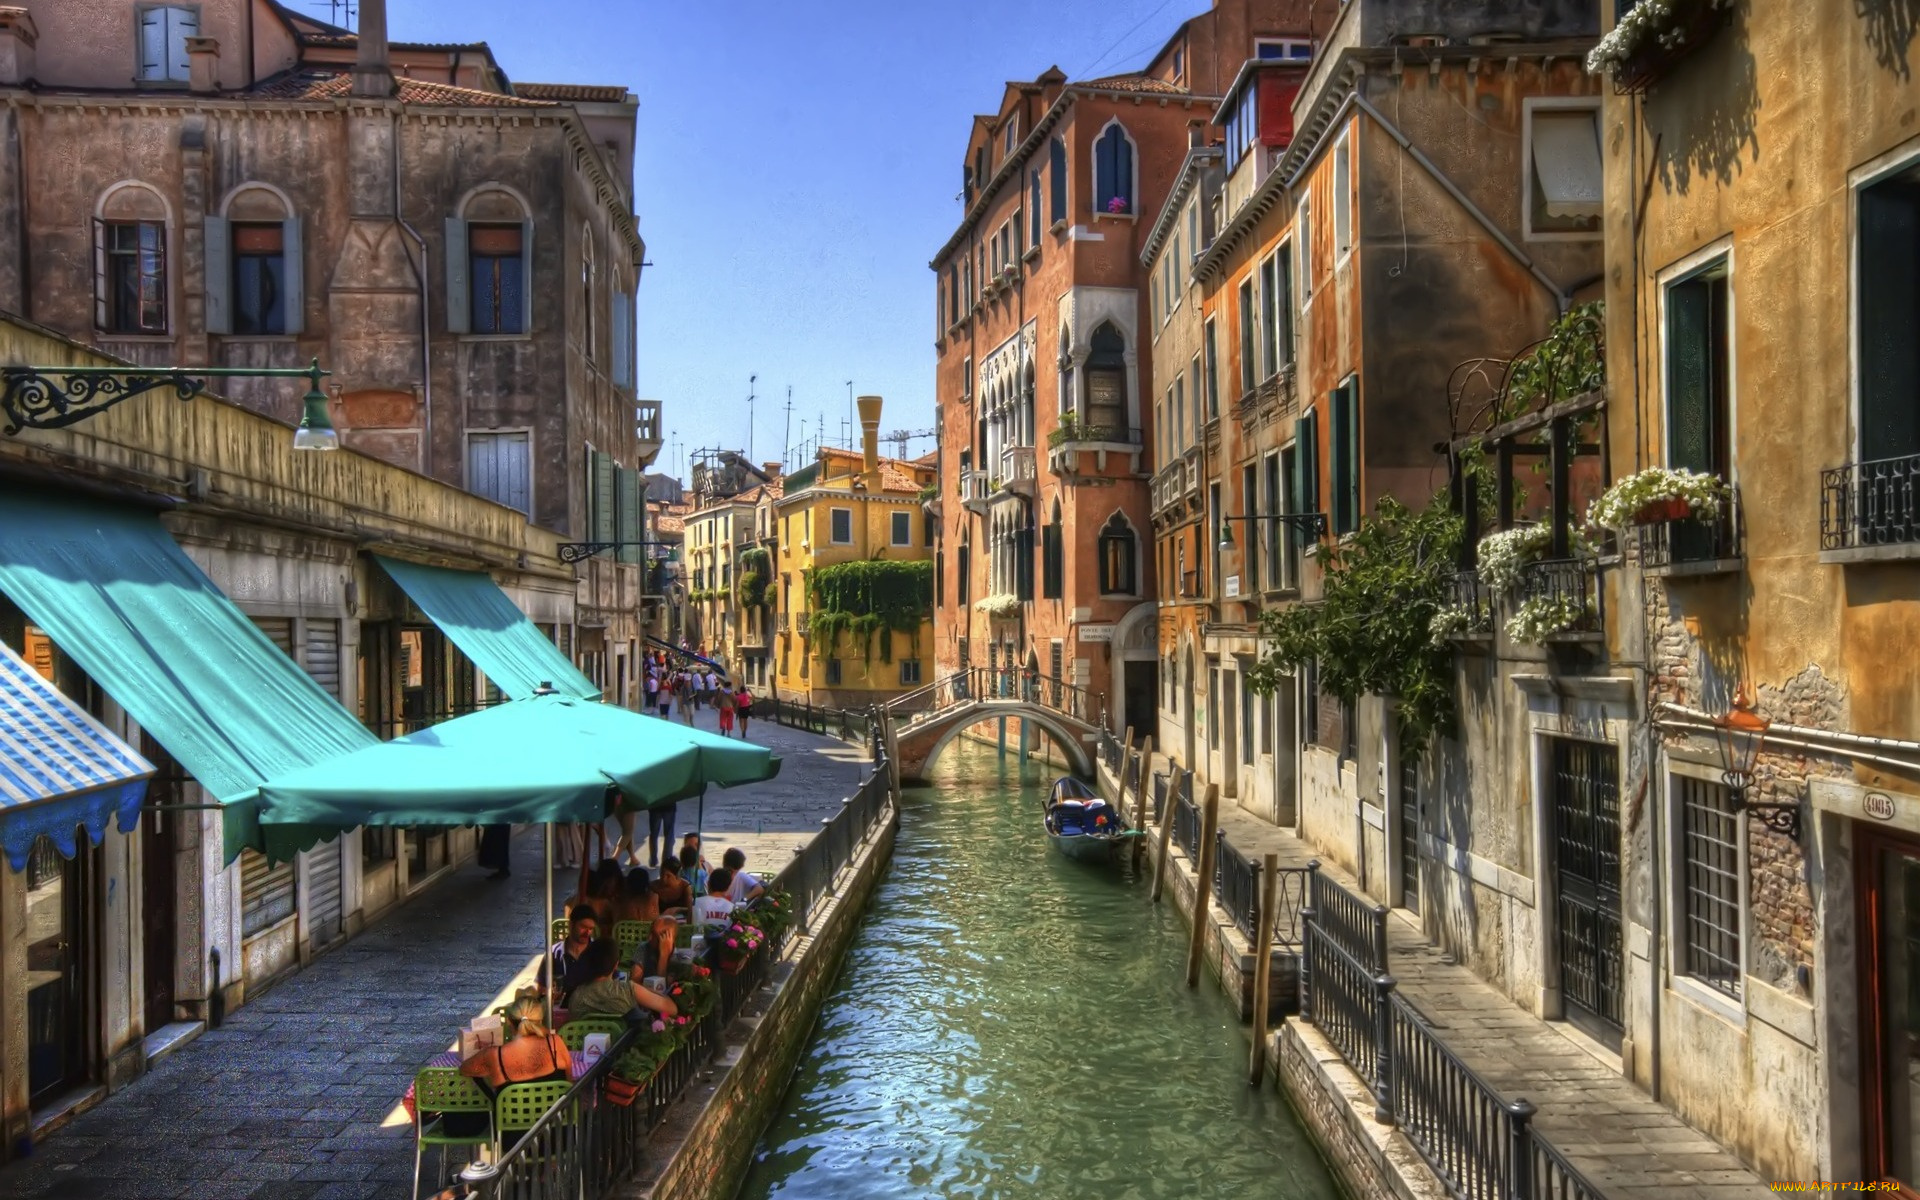 города, венеция, , италия, гондола, люди, мост, дома, канал, здания, кафе